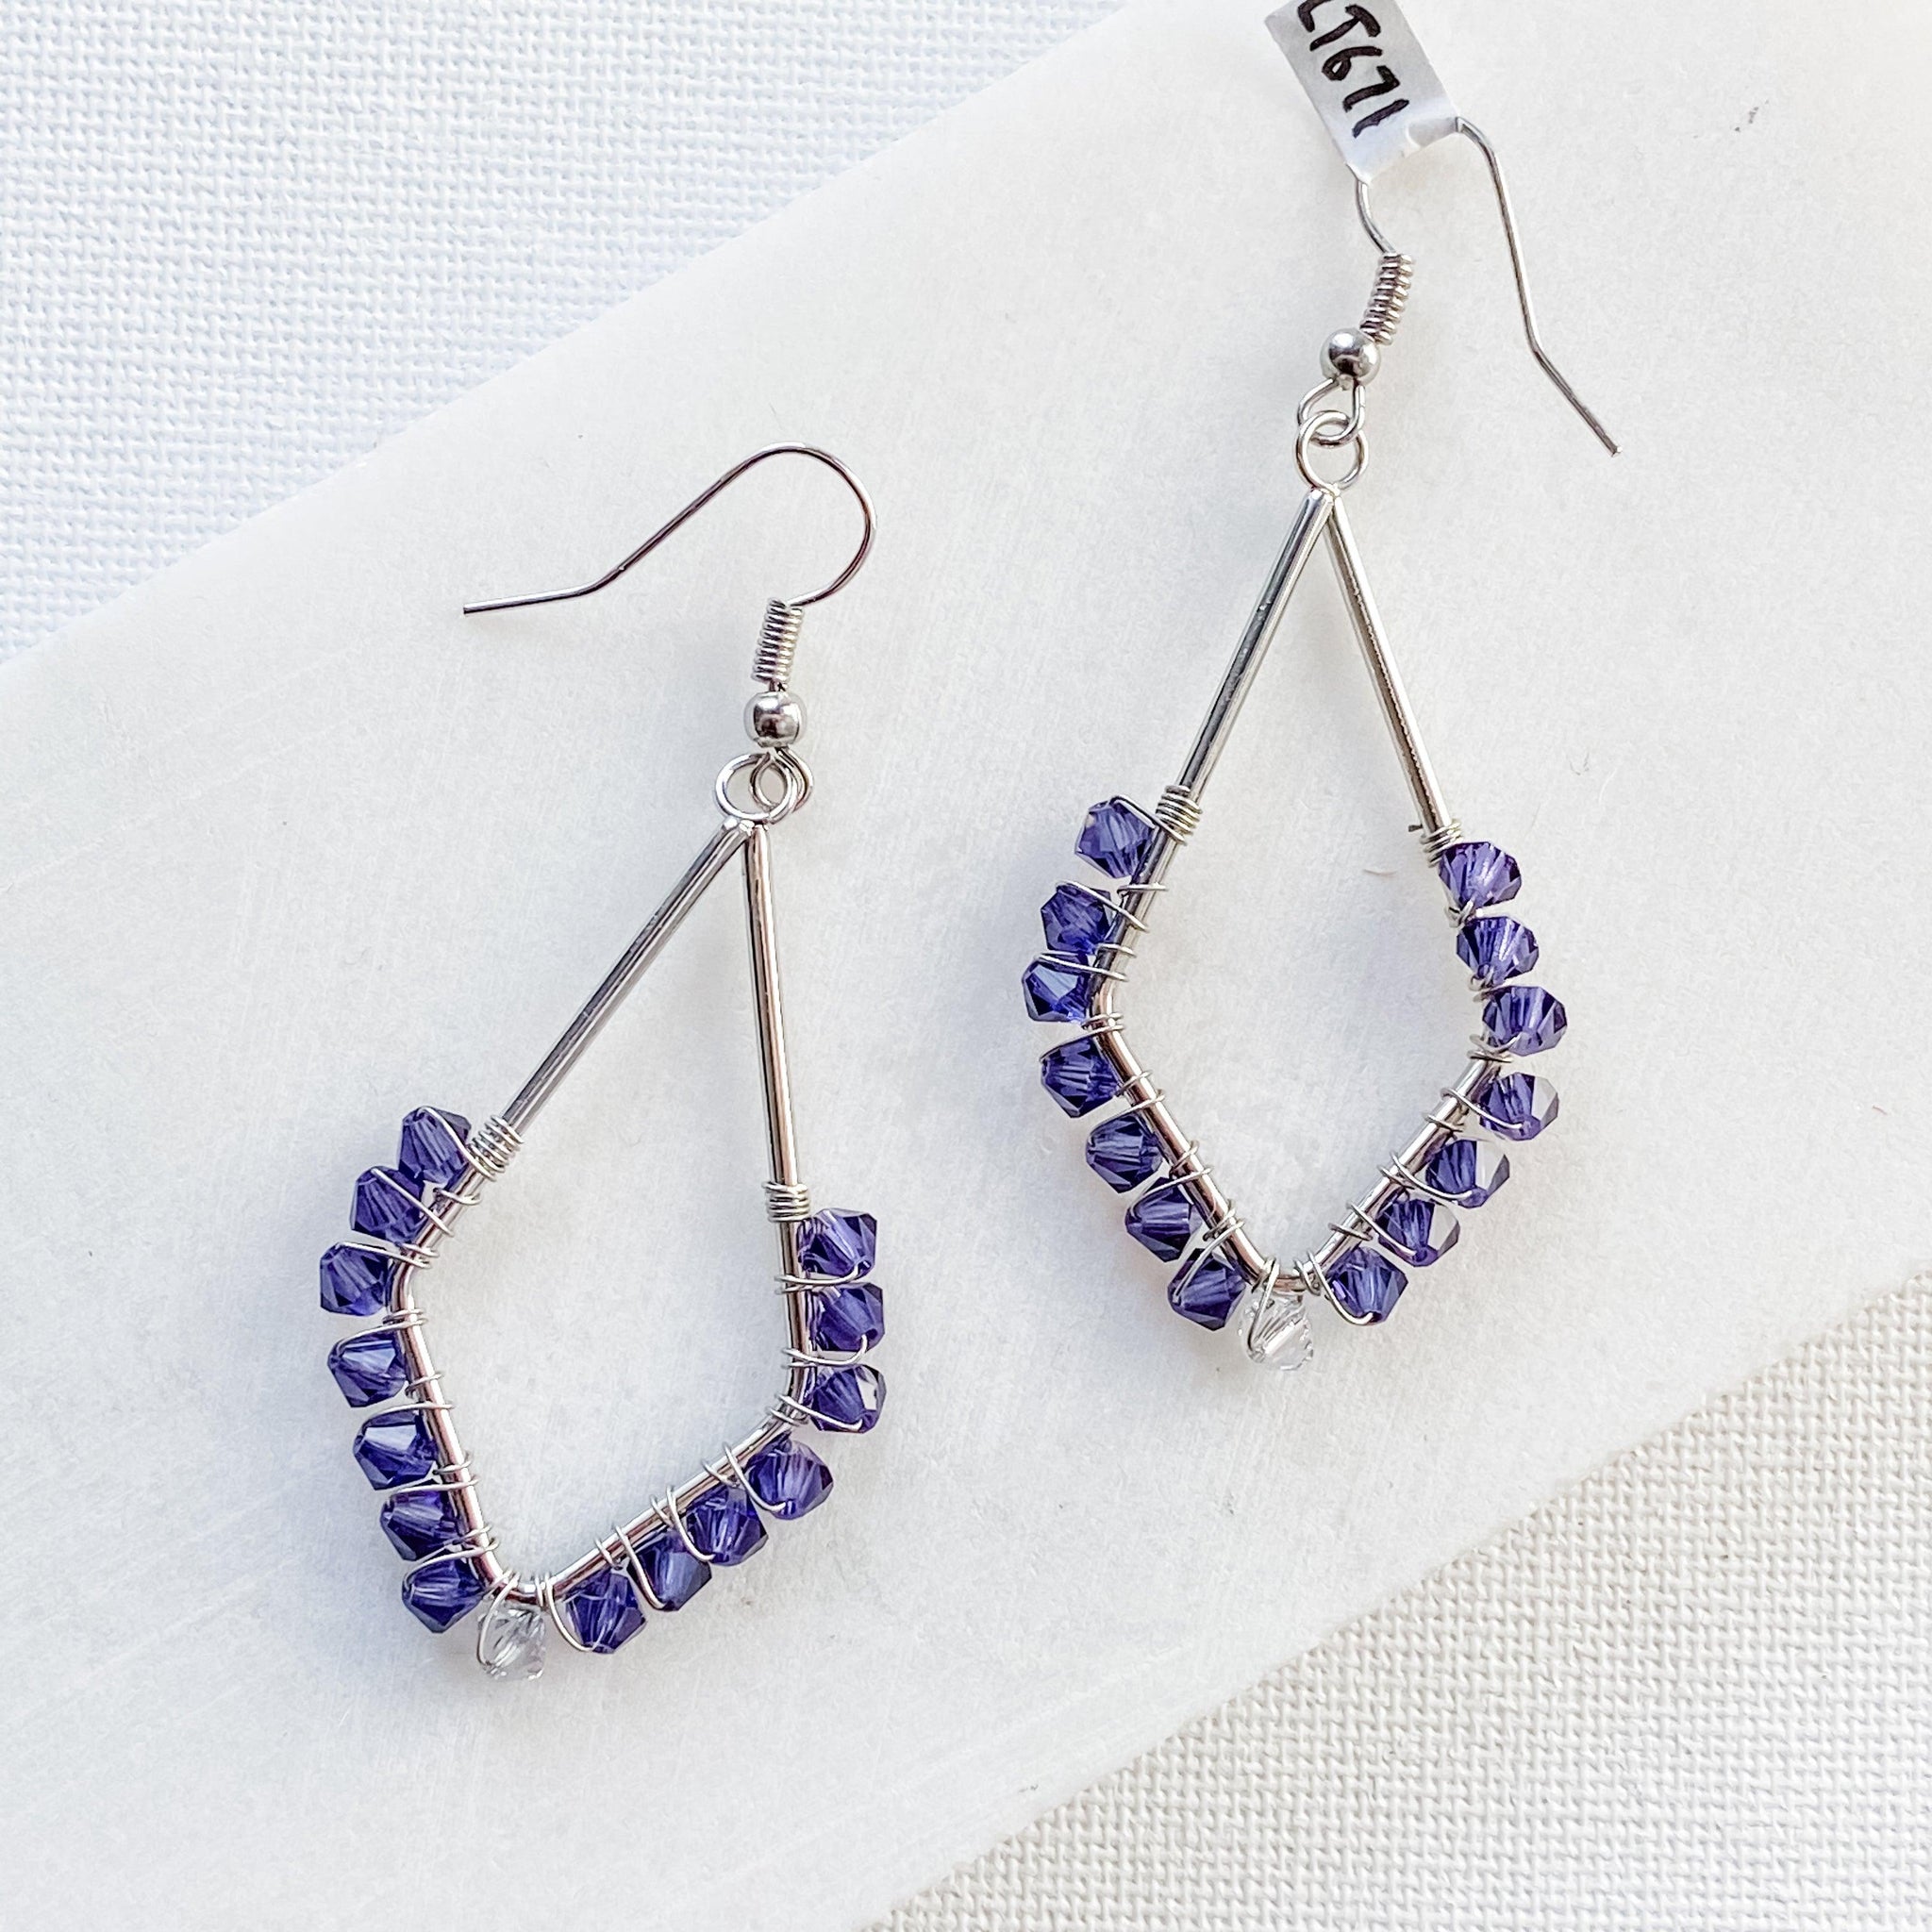 Kite Shape Earrings with Wrapped Swarovski Crystals - Blue, Purple &amp; Cobalt - Large Uni-T